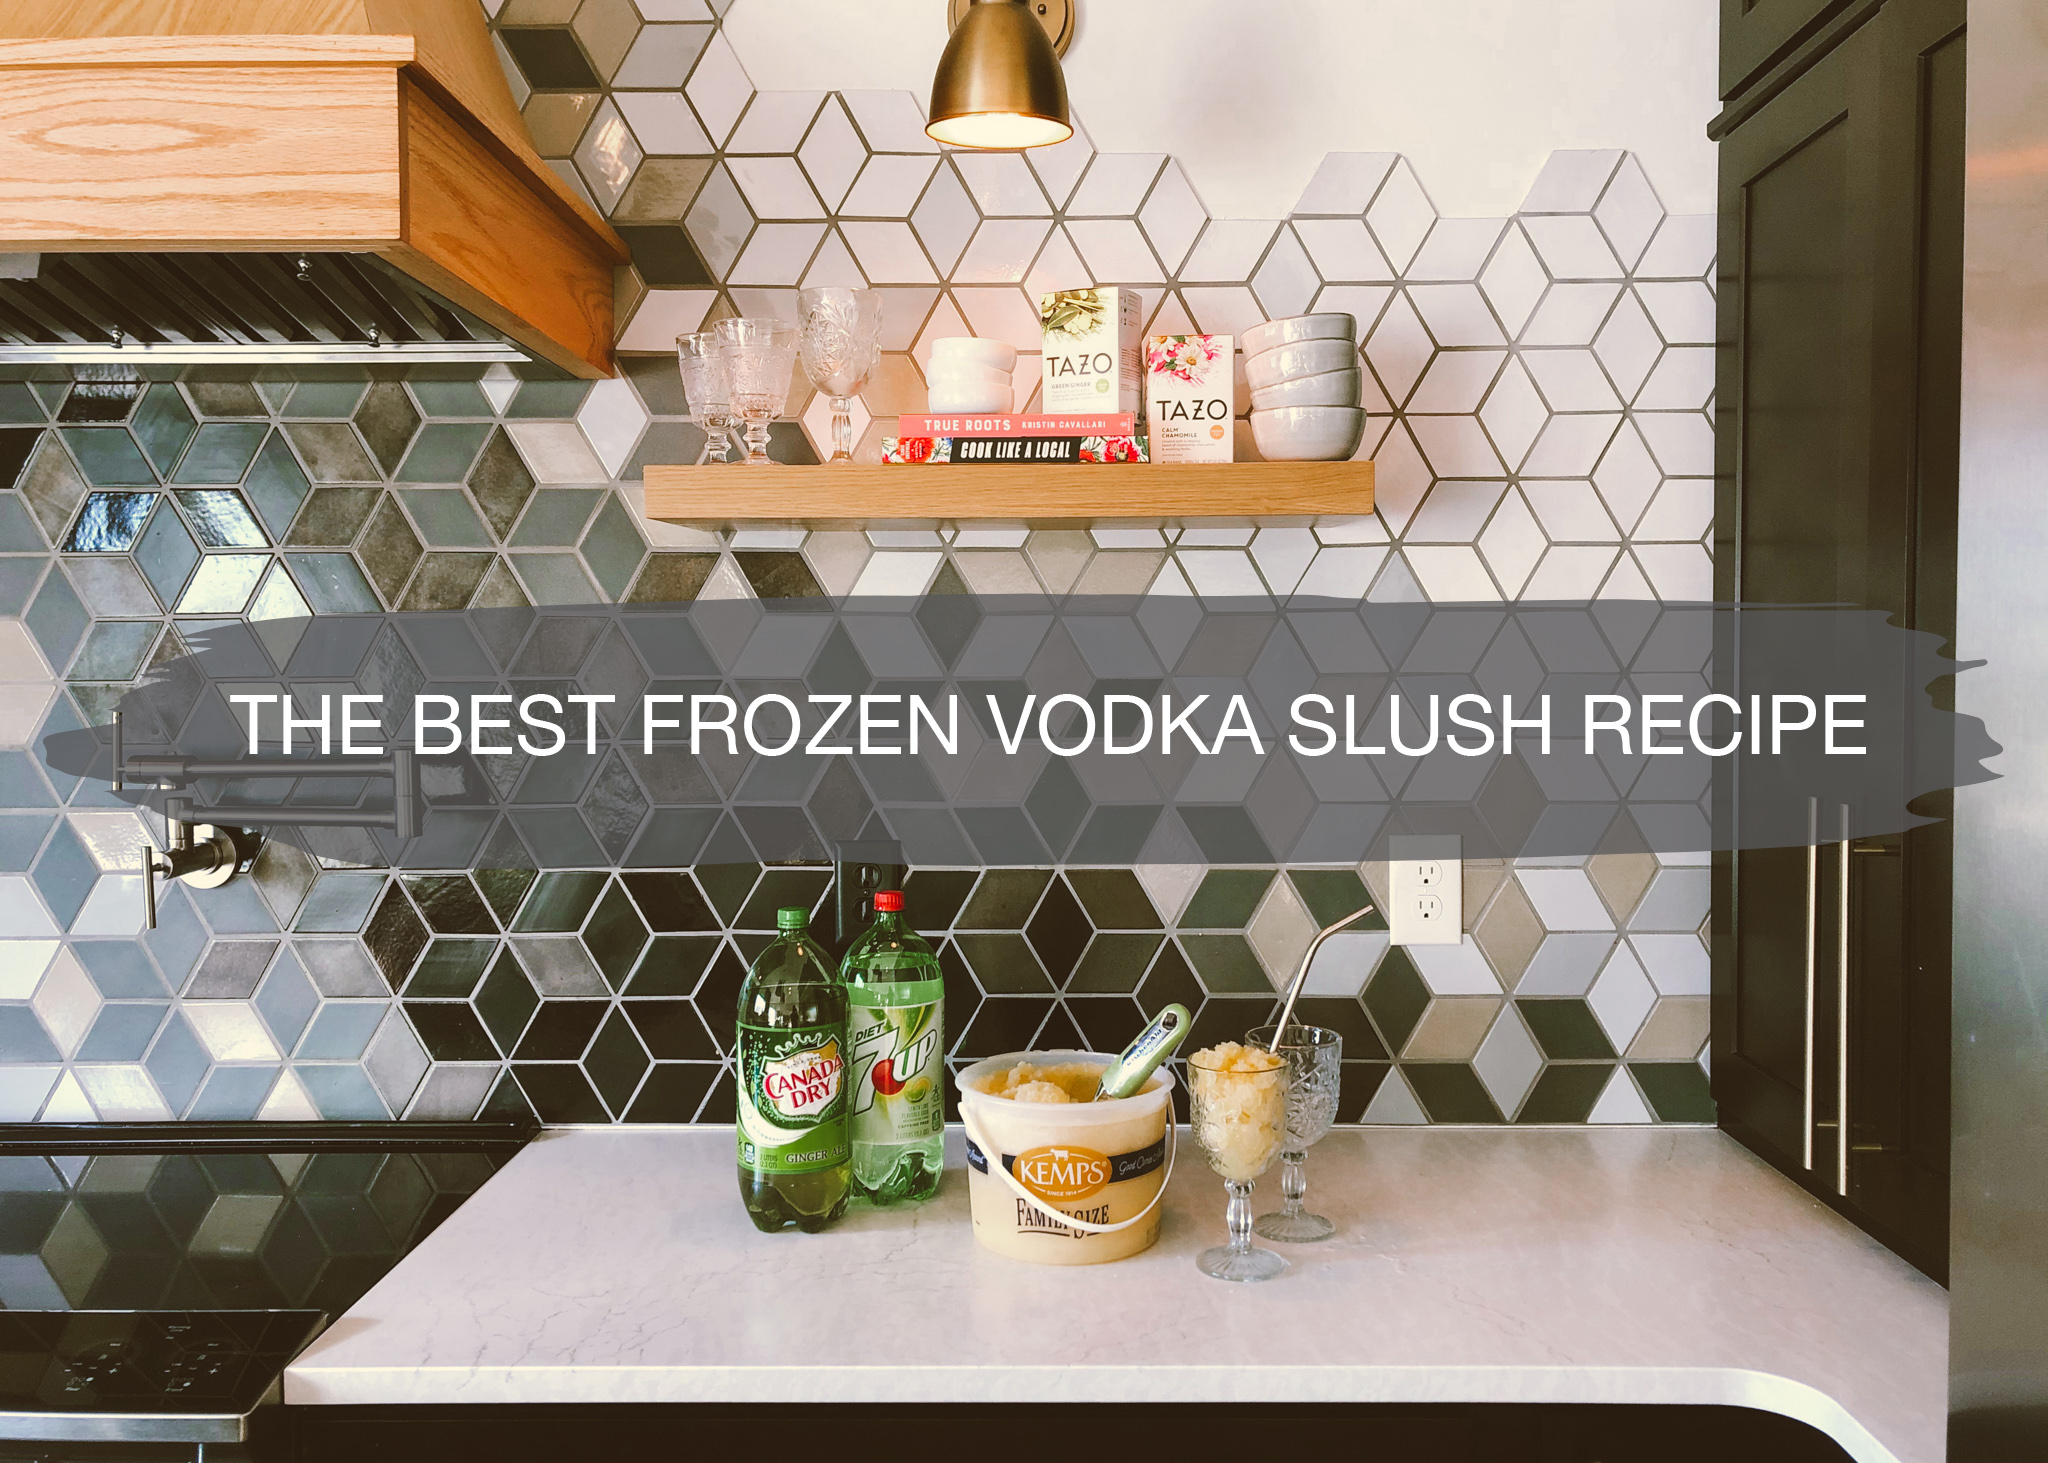 Vodka Slush Recipe